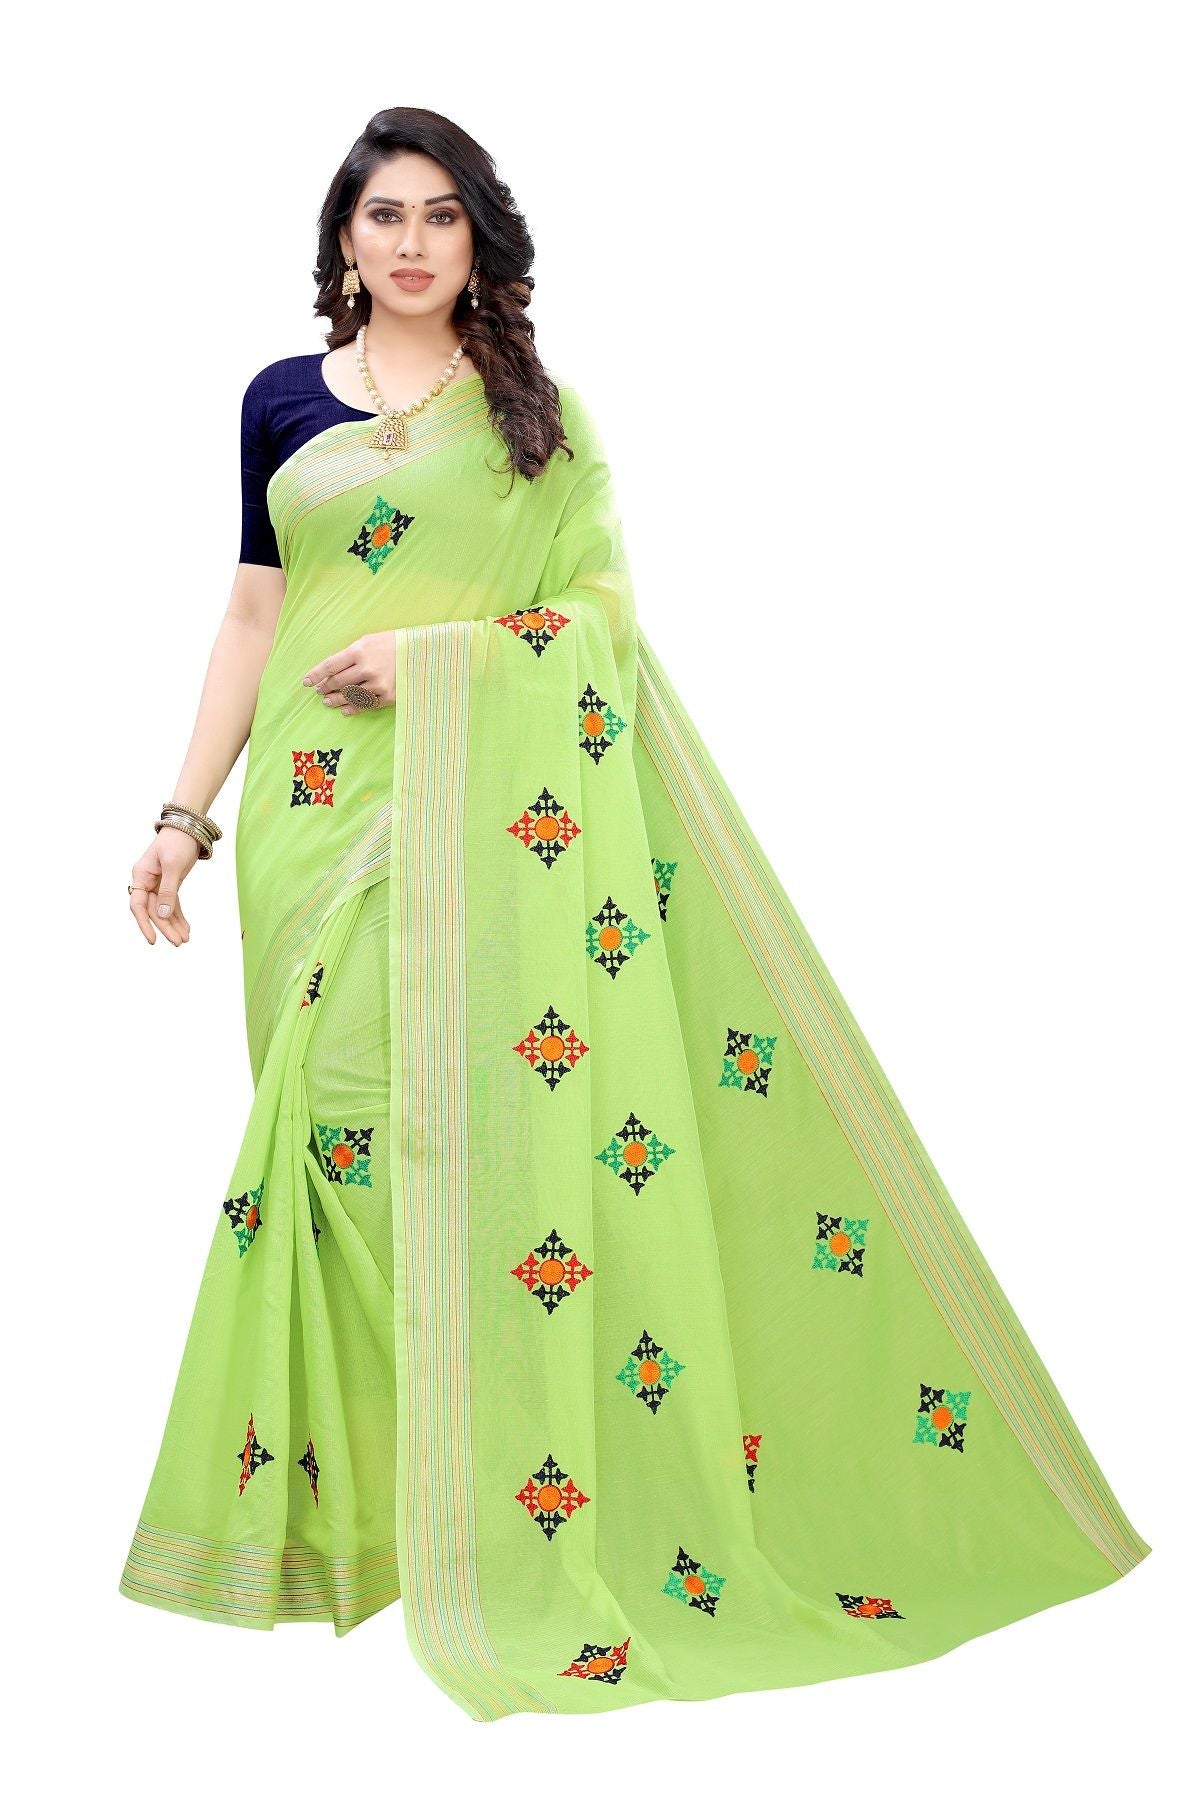 Women's Vamika Chanderi Cotton Embroidery Green Saree-Dixa Green - Vamika